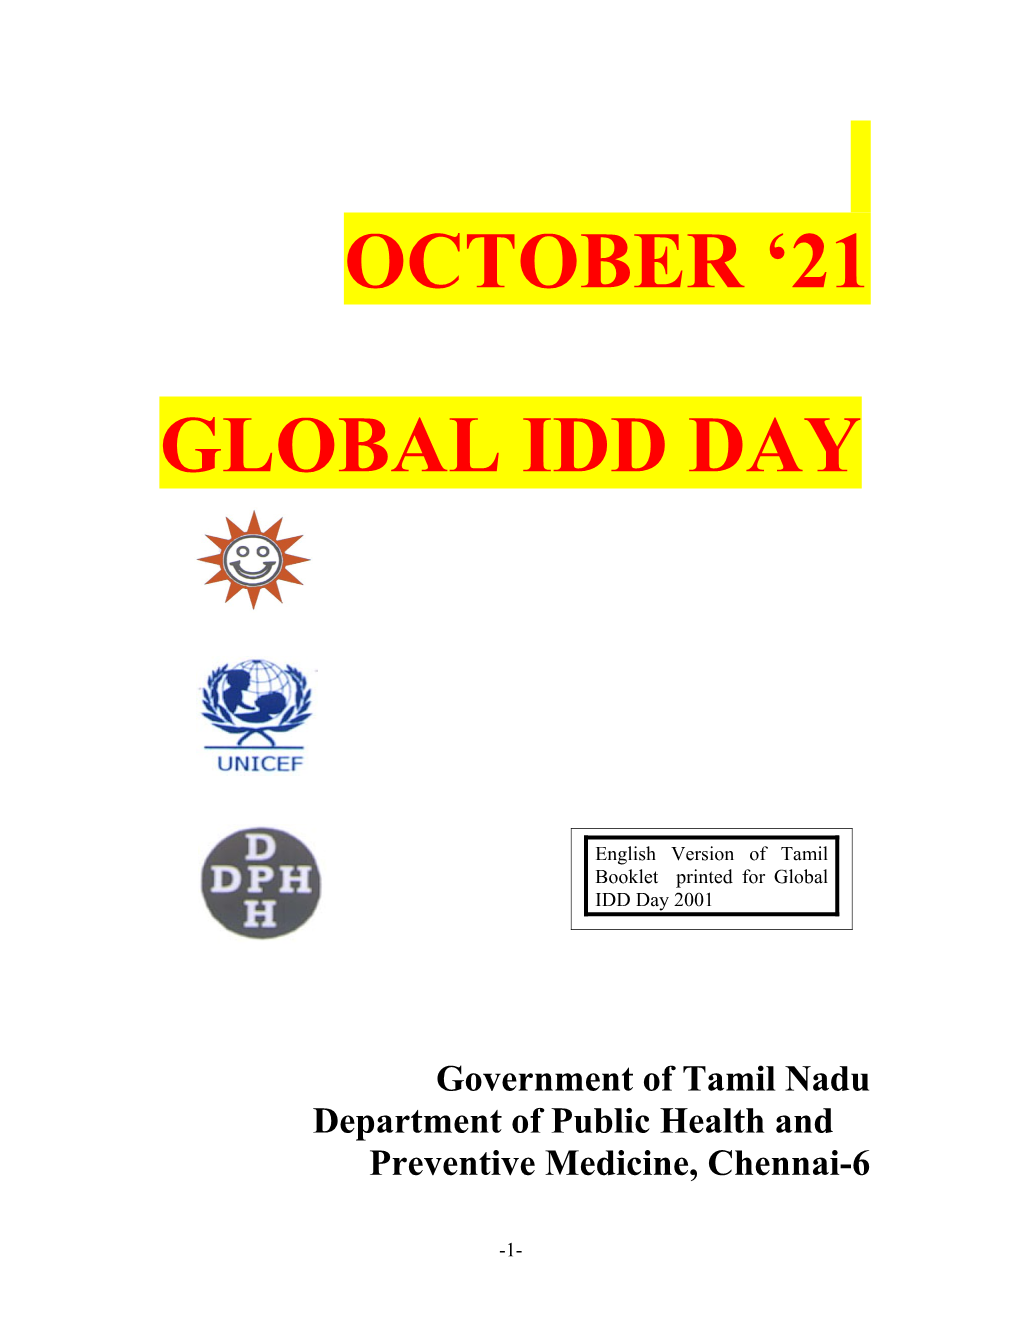 Global Idd Day